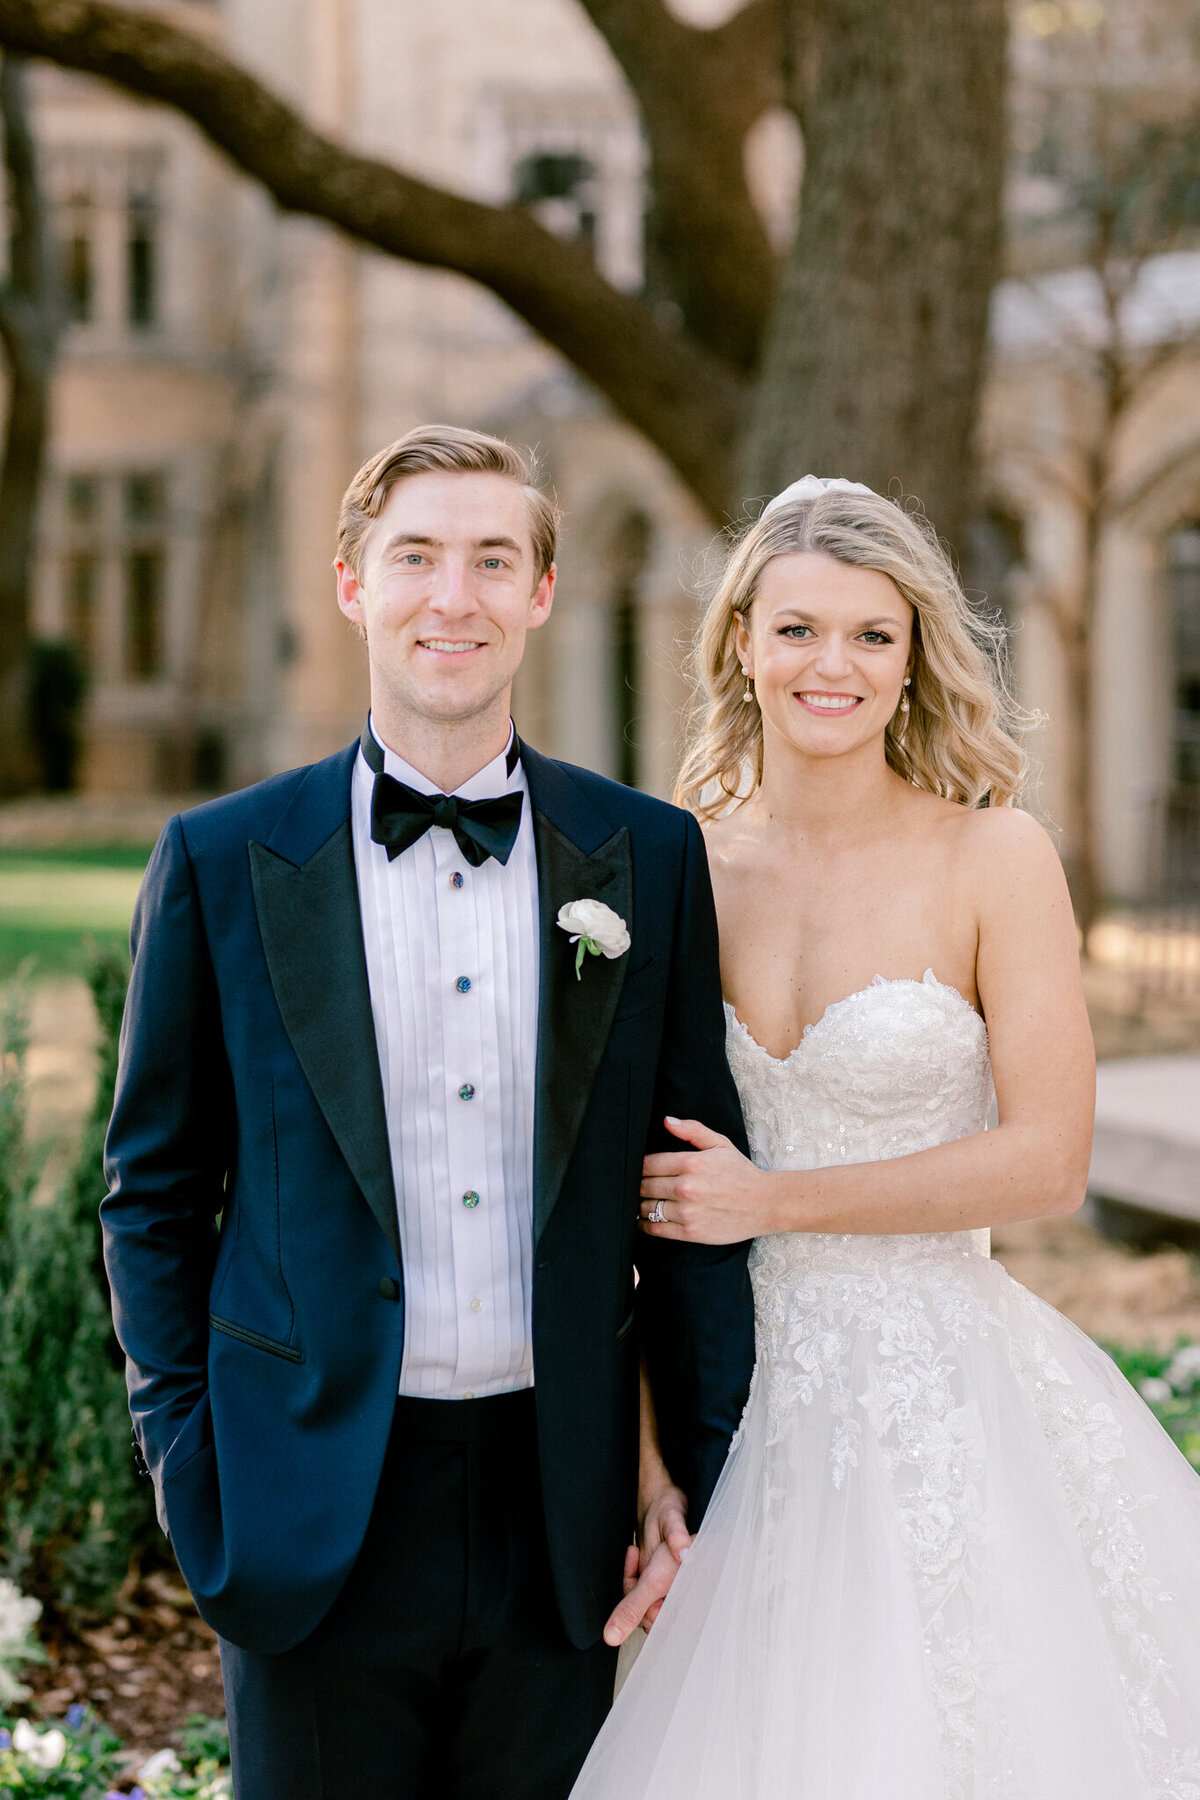 Shelby & Thomas's Wedding at HPUMC The Room on Main | Dallas Wedding Photographer | Sami Kathryn Photography-10